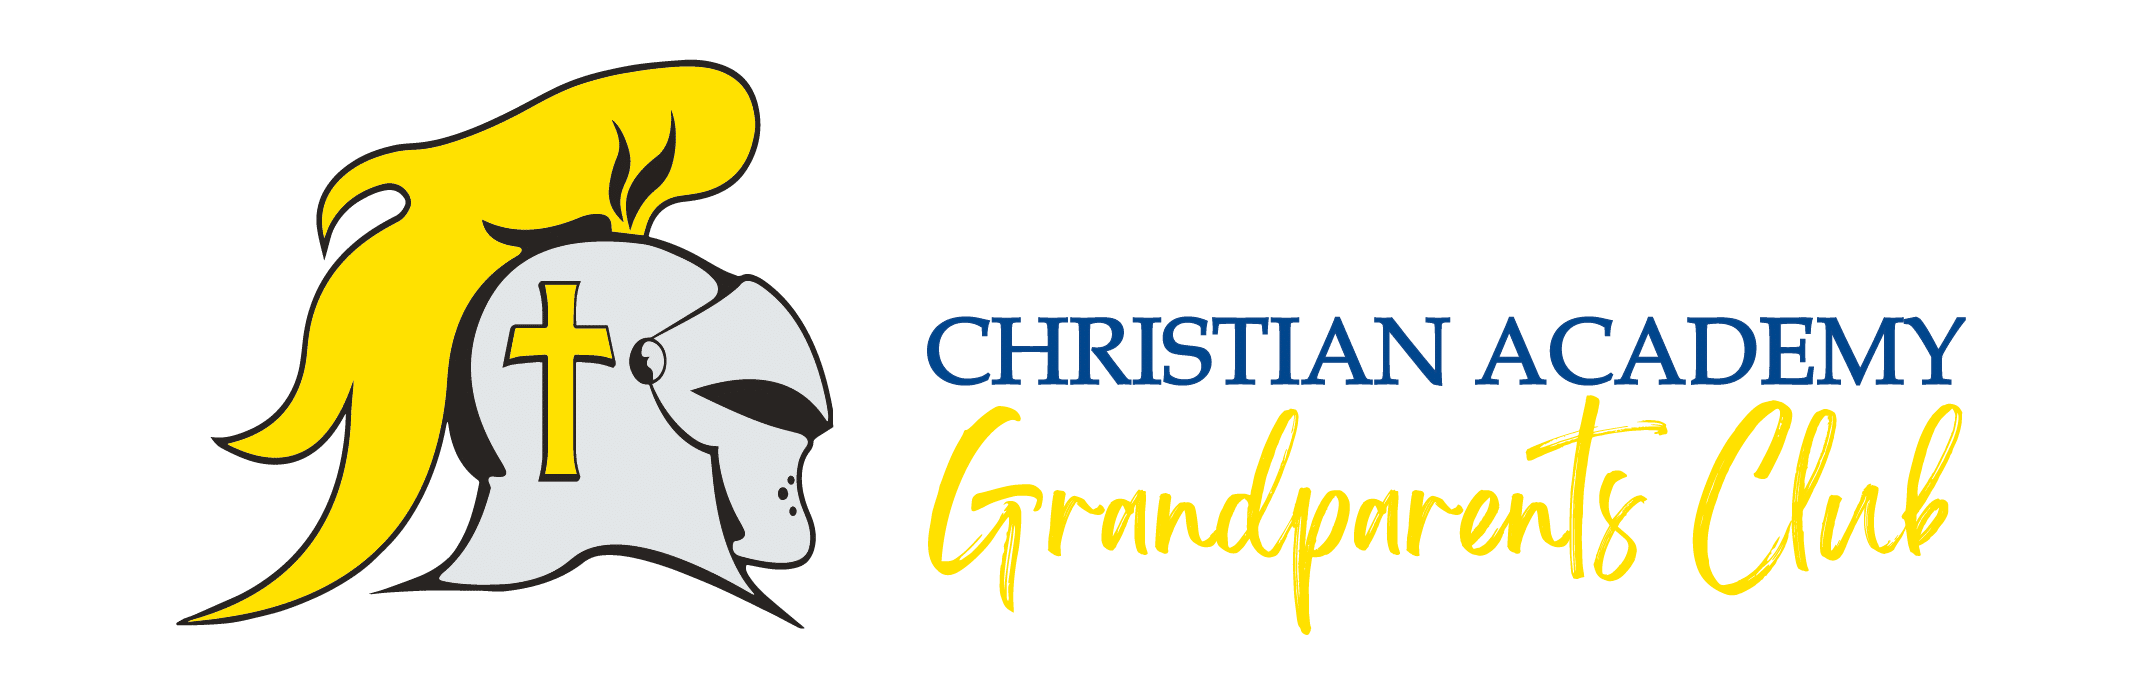 Christian Academy School System | Christian Academy of Indiana | Grandparents Club